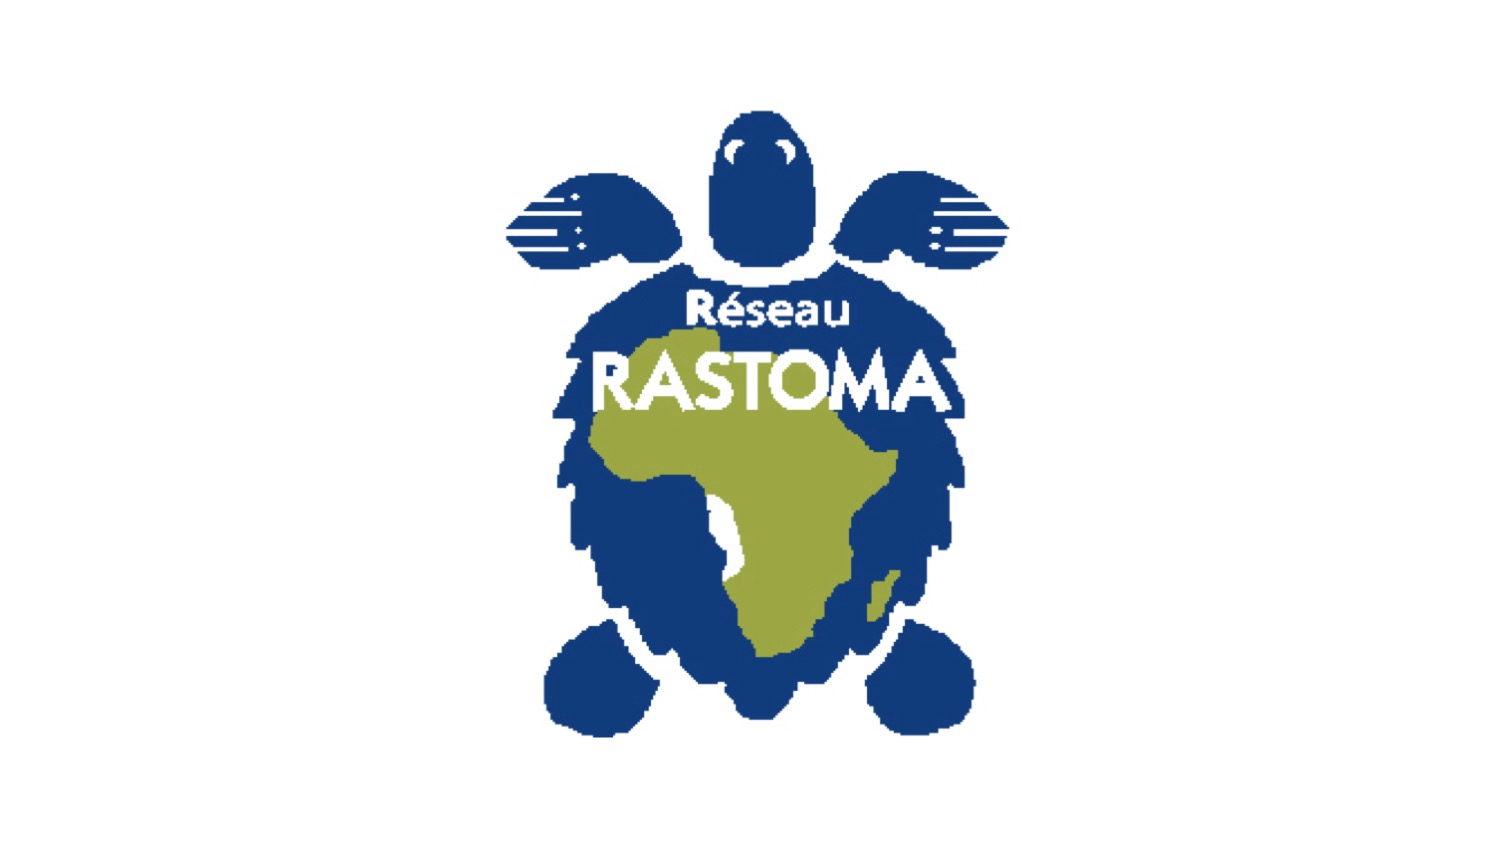 Rastoma Logo